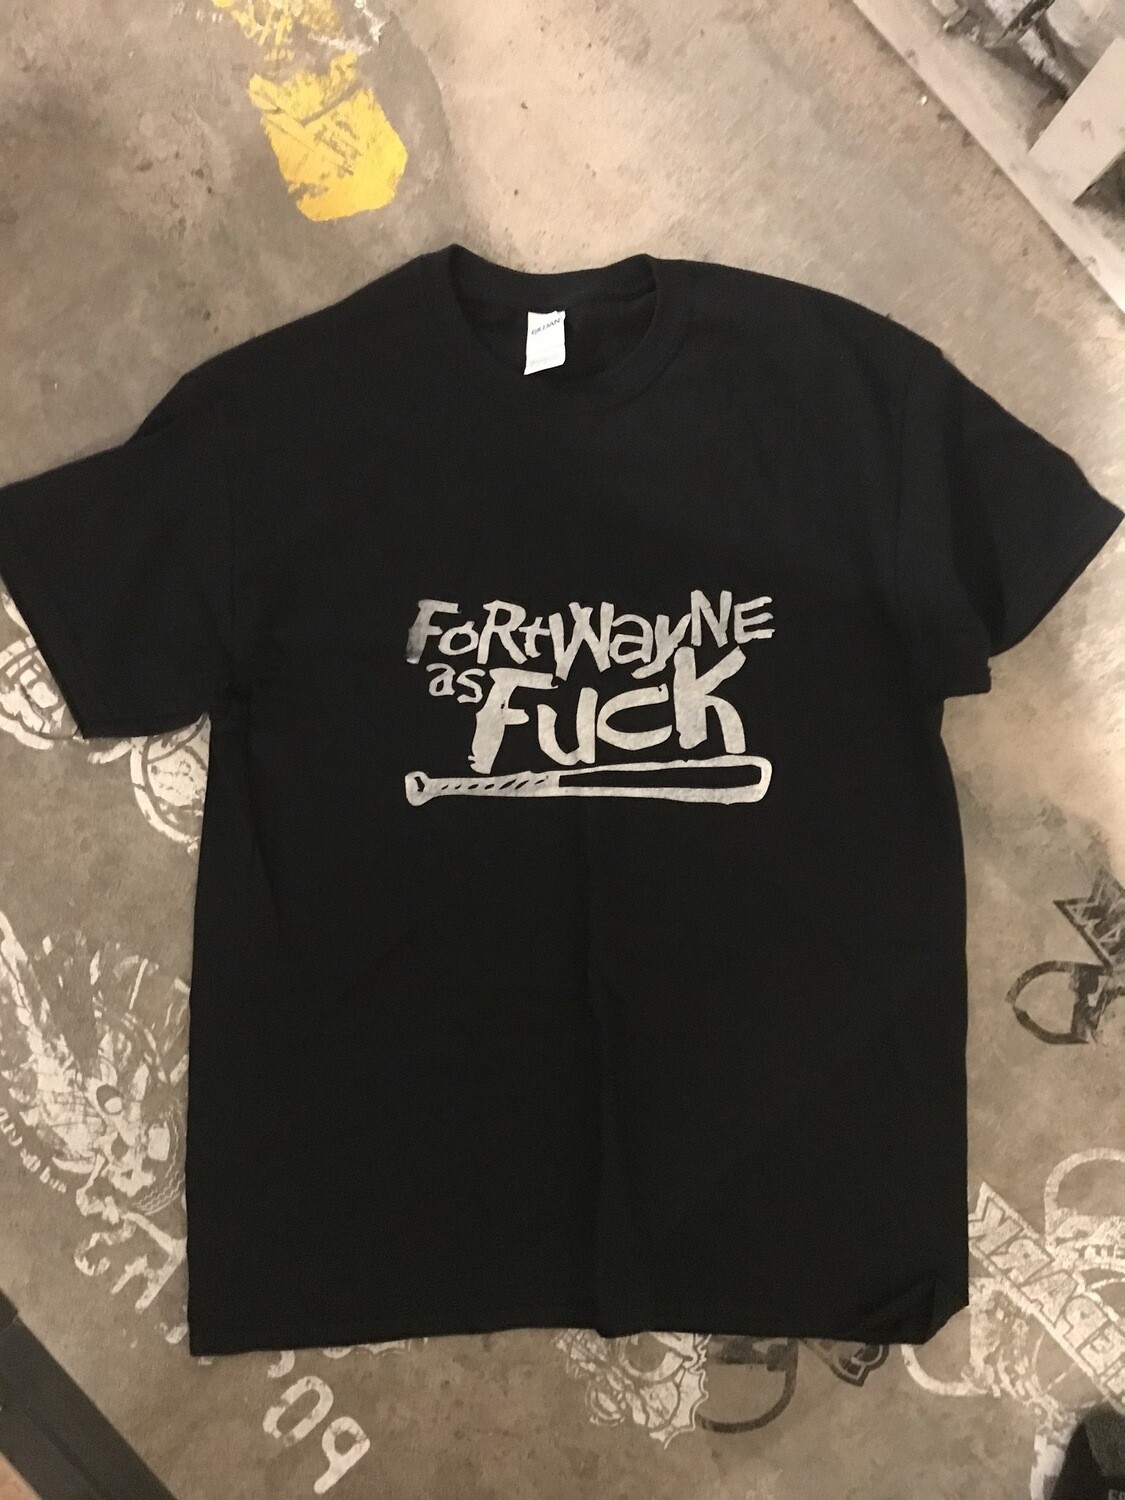 Fort Wayne As Fuck T-shirt